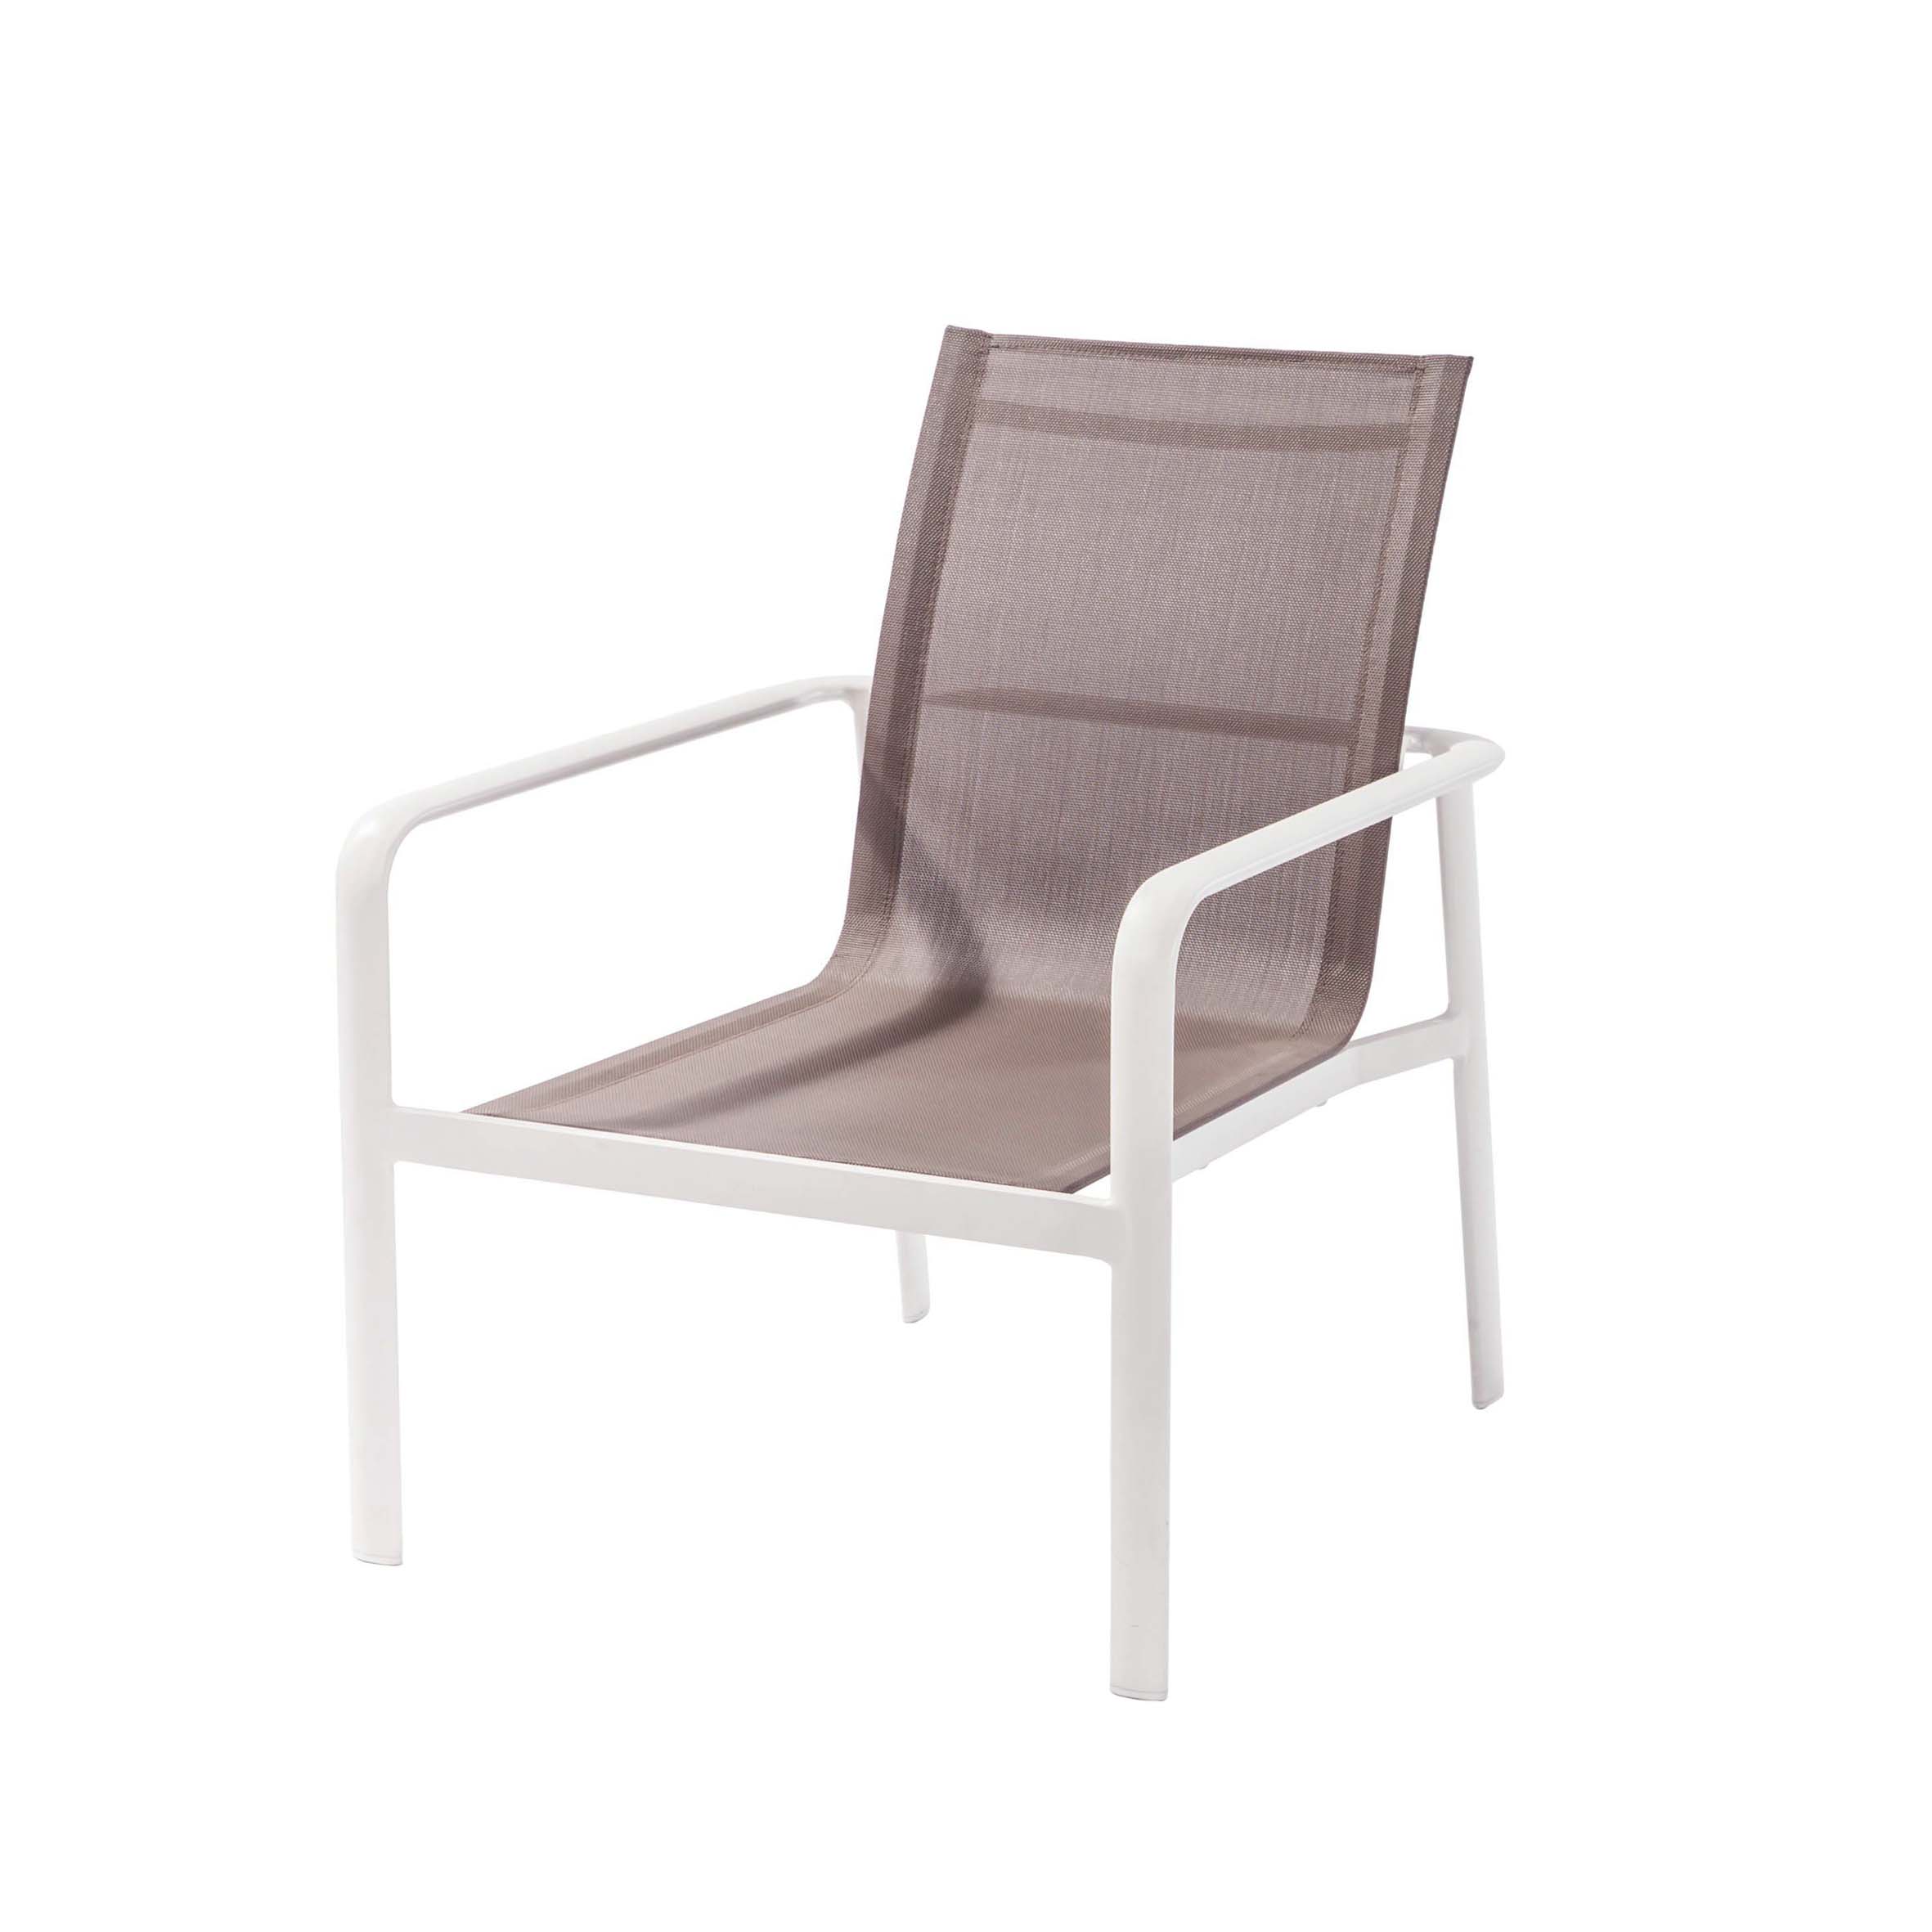 Moon textile leisure chair S1